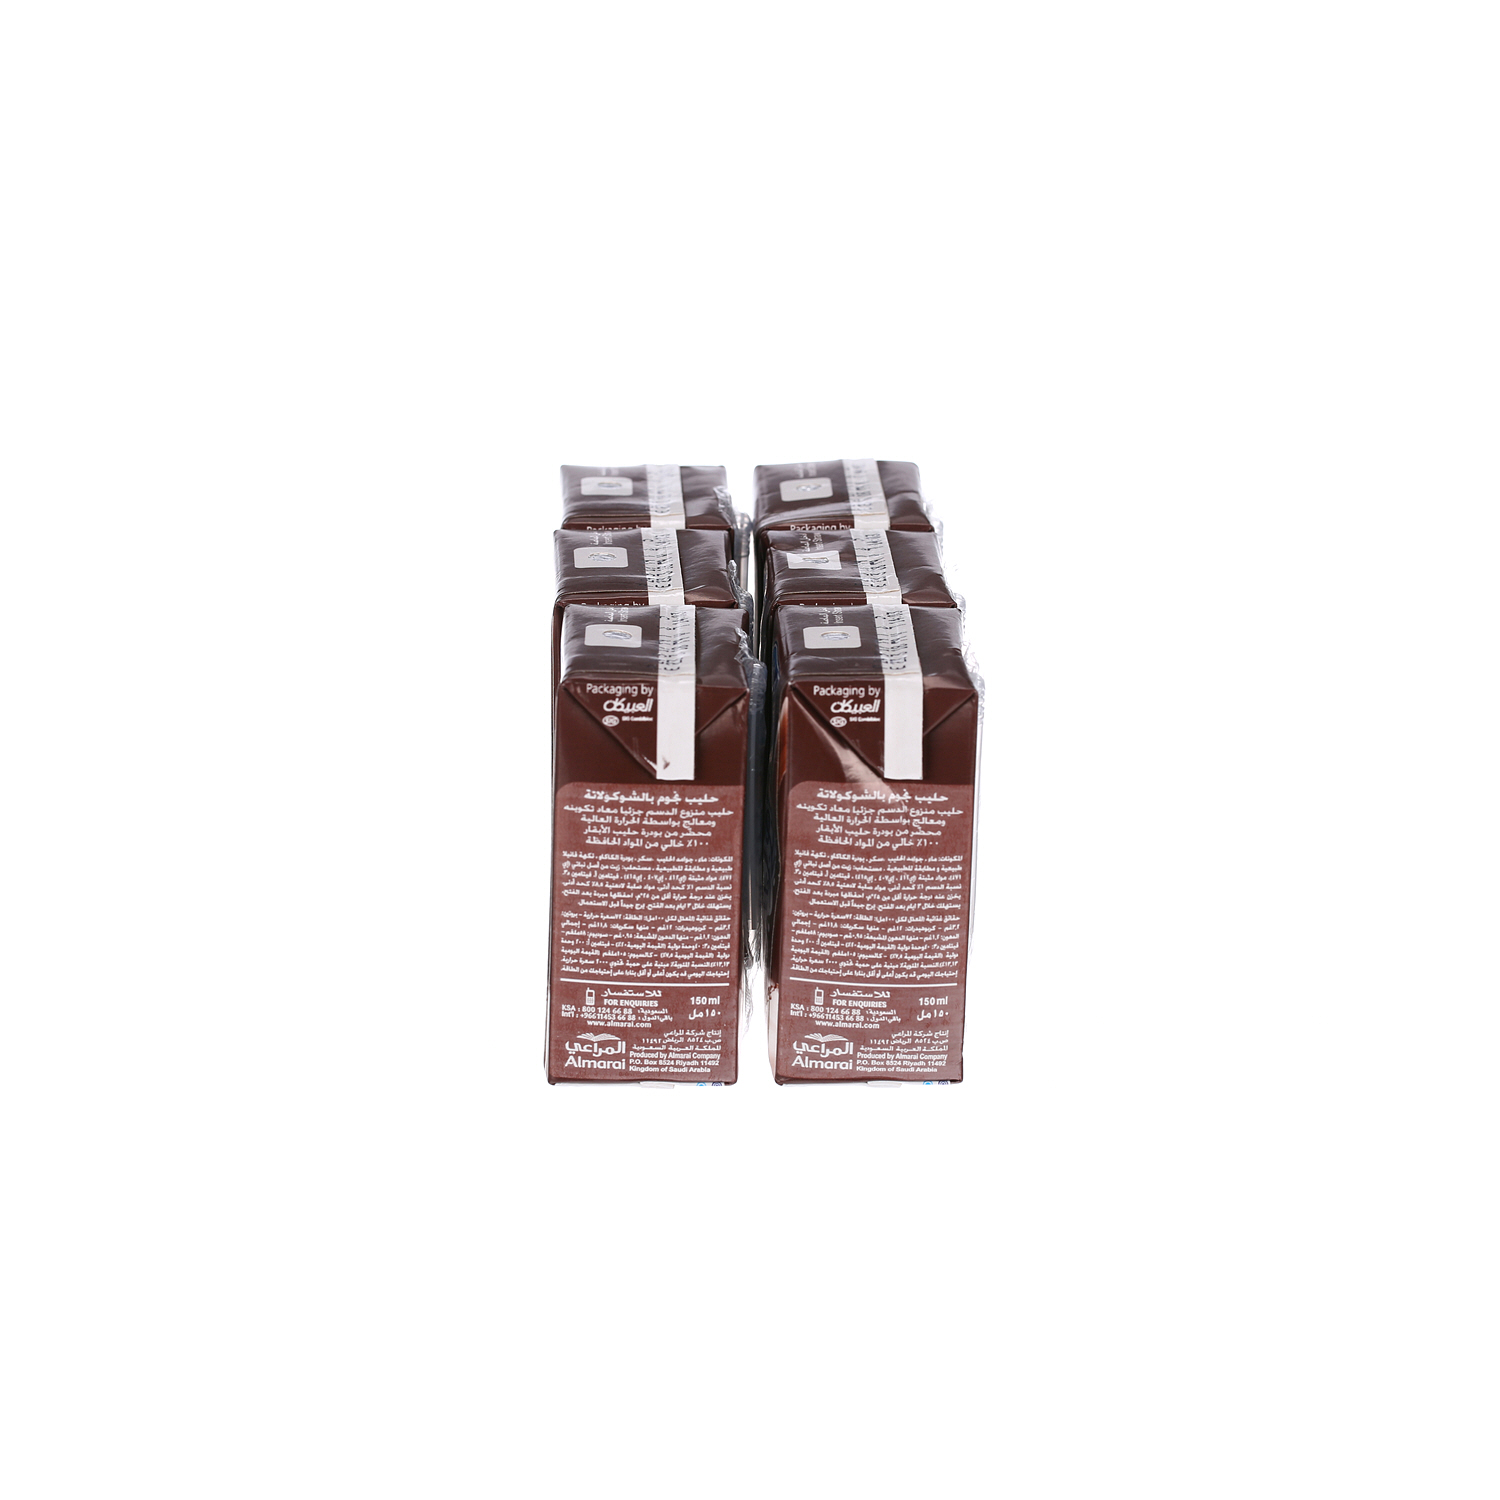 Almarai Long Life Milk Chocolate 150ml × 6'S